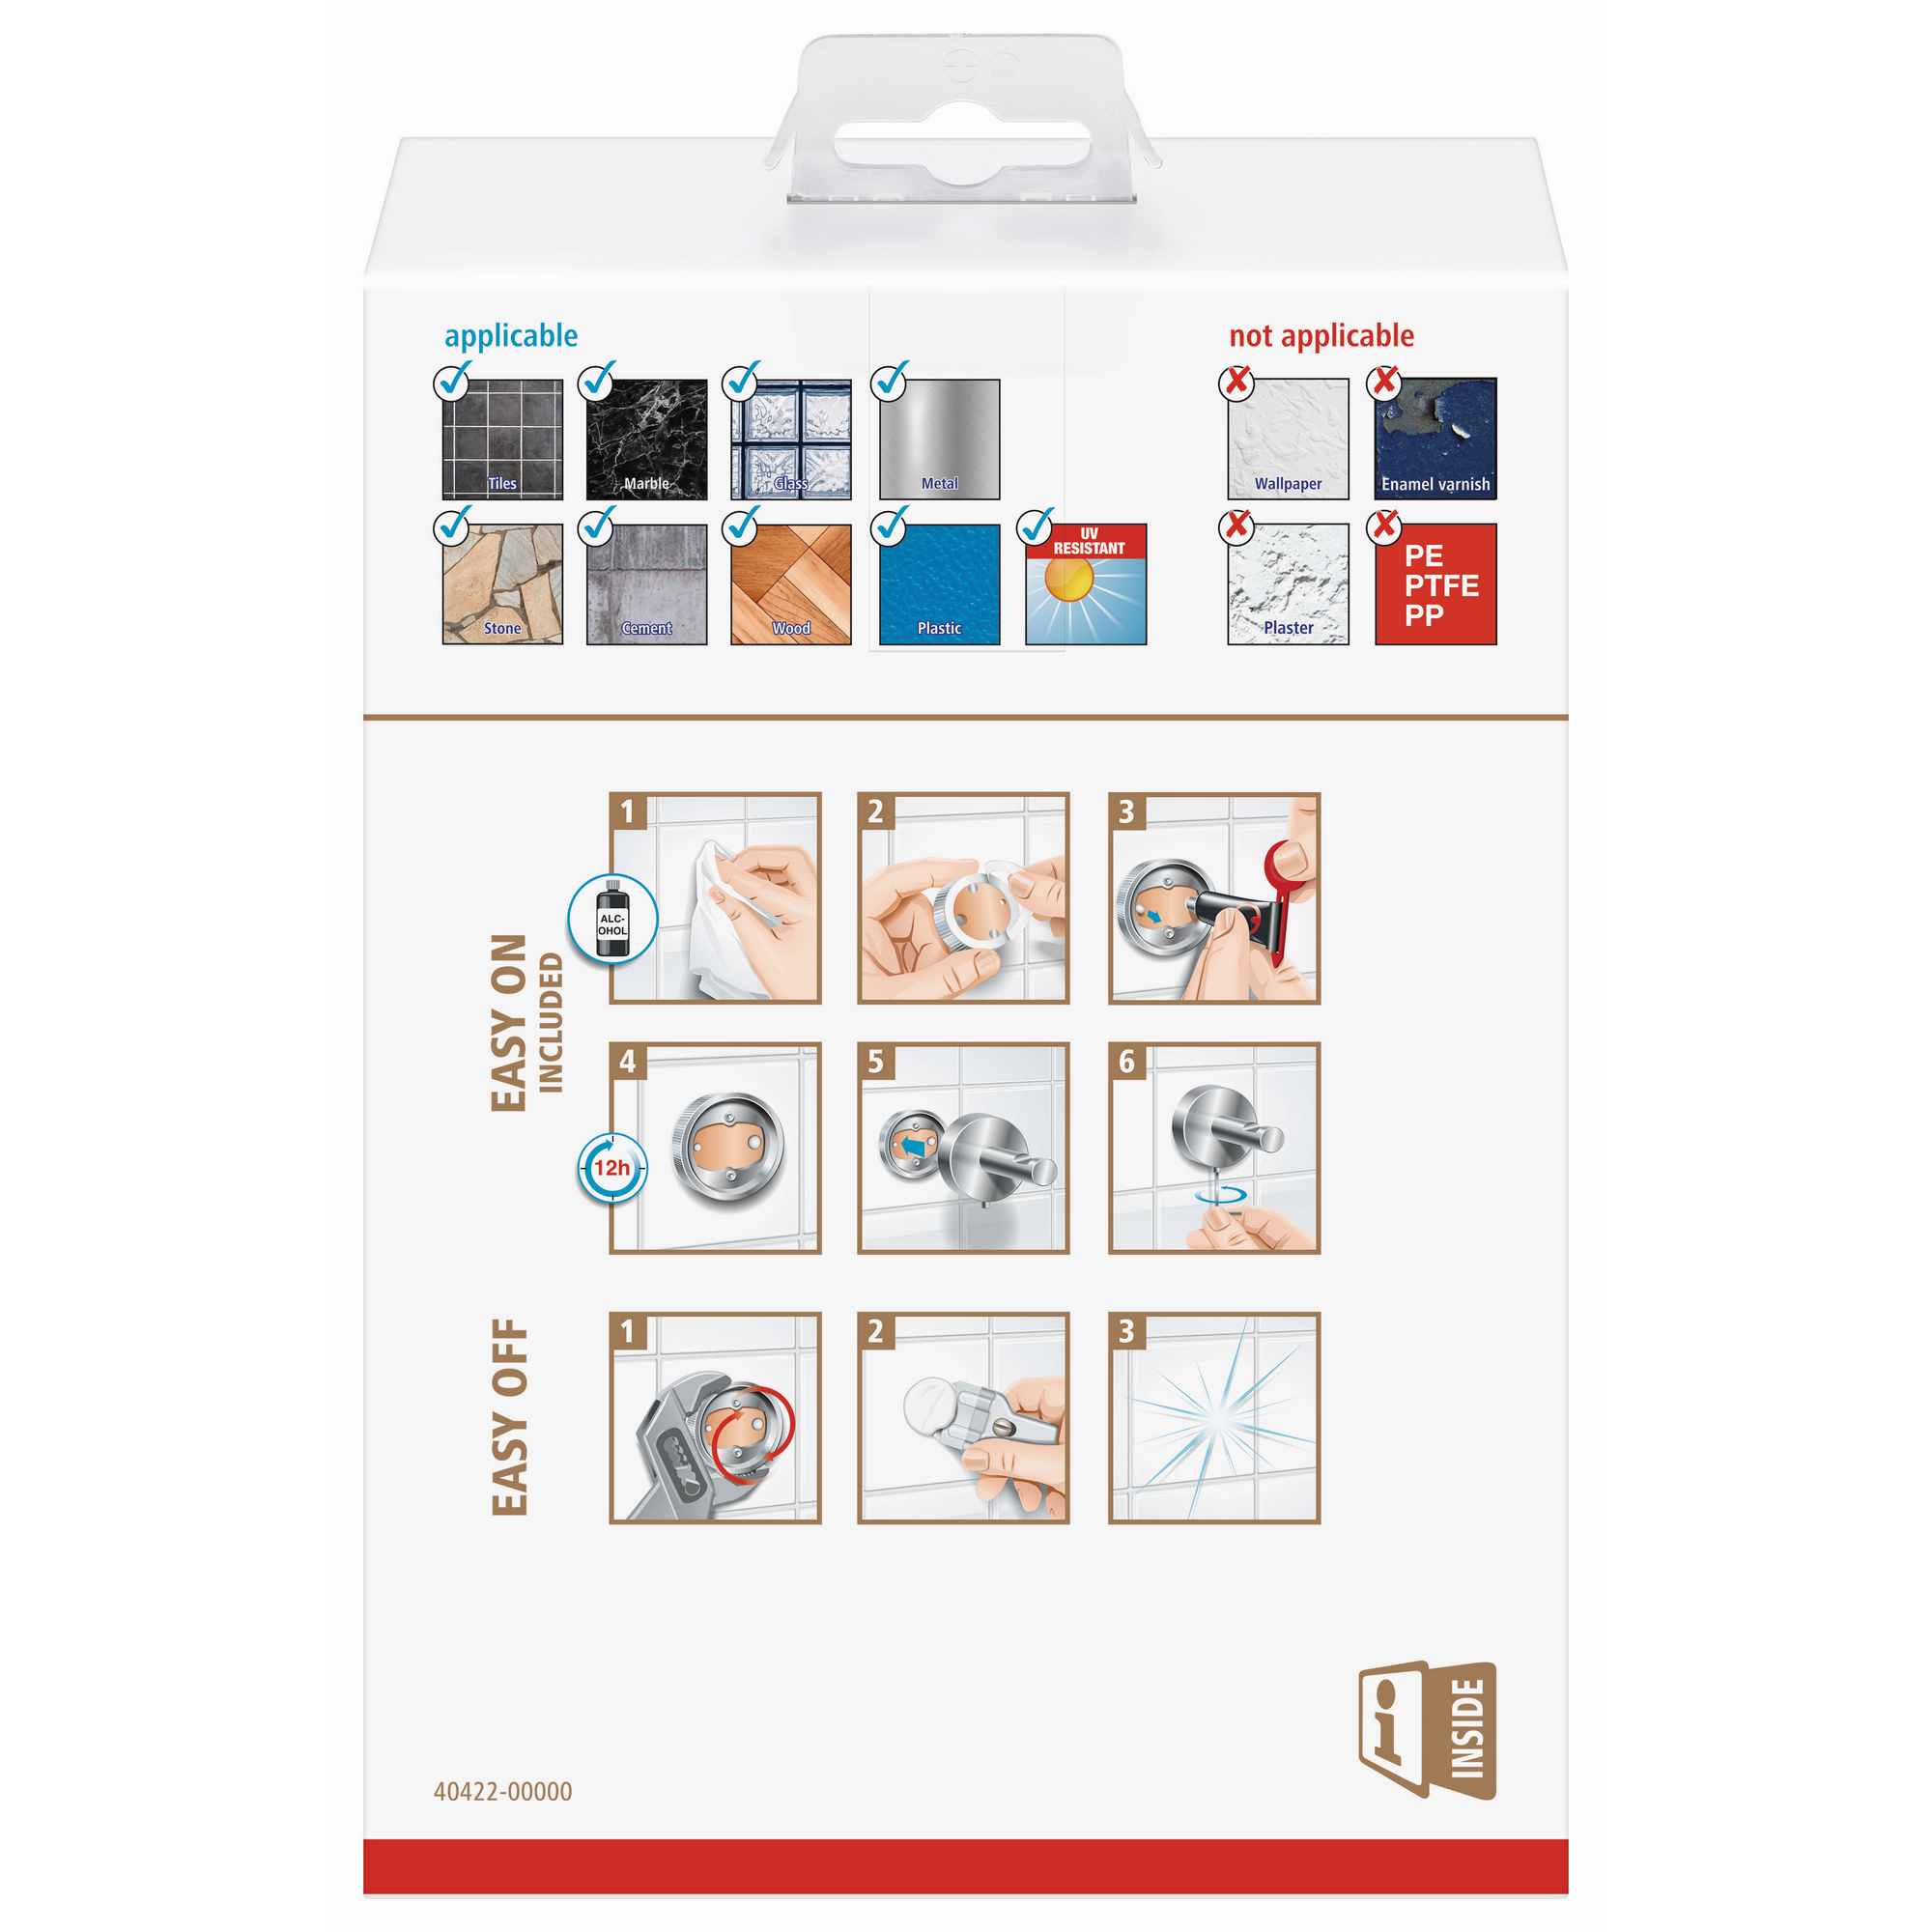 Seifenspender 'Exxclusiv' Edelstahloptik mit Klebelösung 7,3 x 19,2 x 11,5 cm + product picture